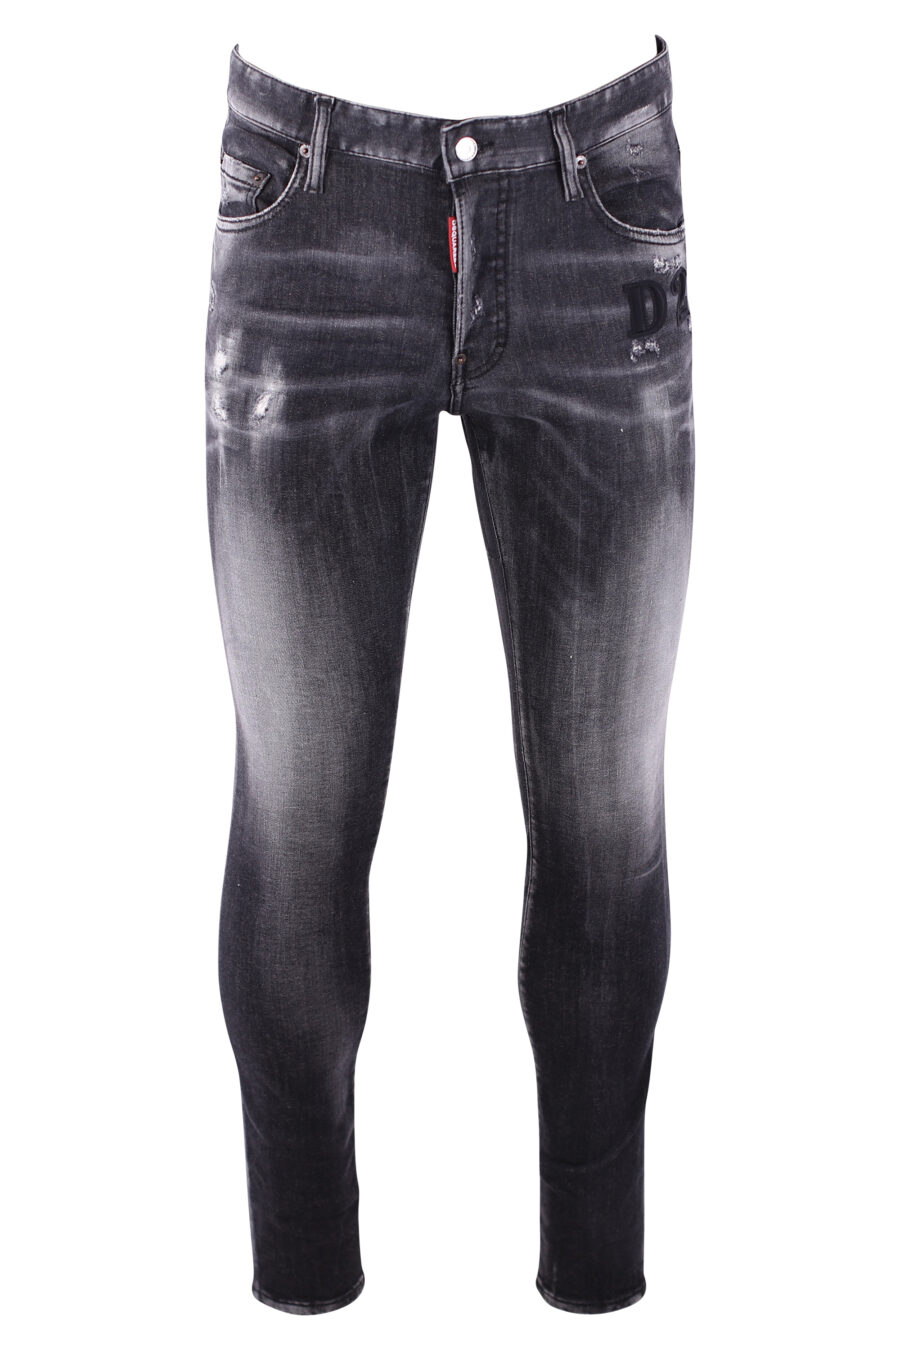 Super twinkie" jeans black frayed with black "D2" logo - IMG 3252